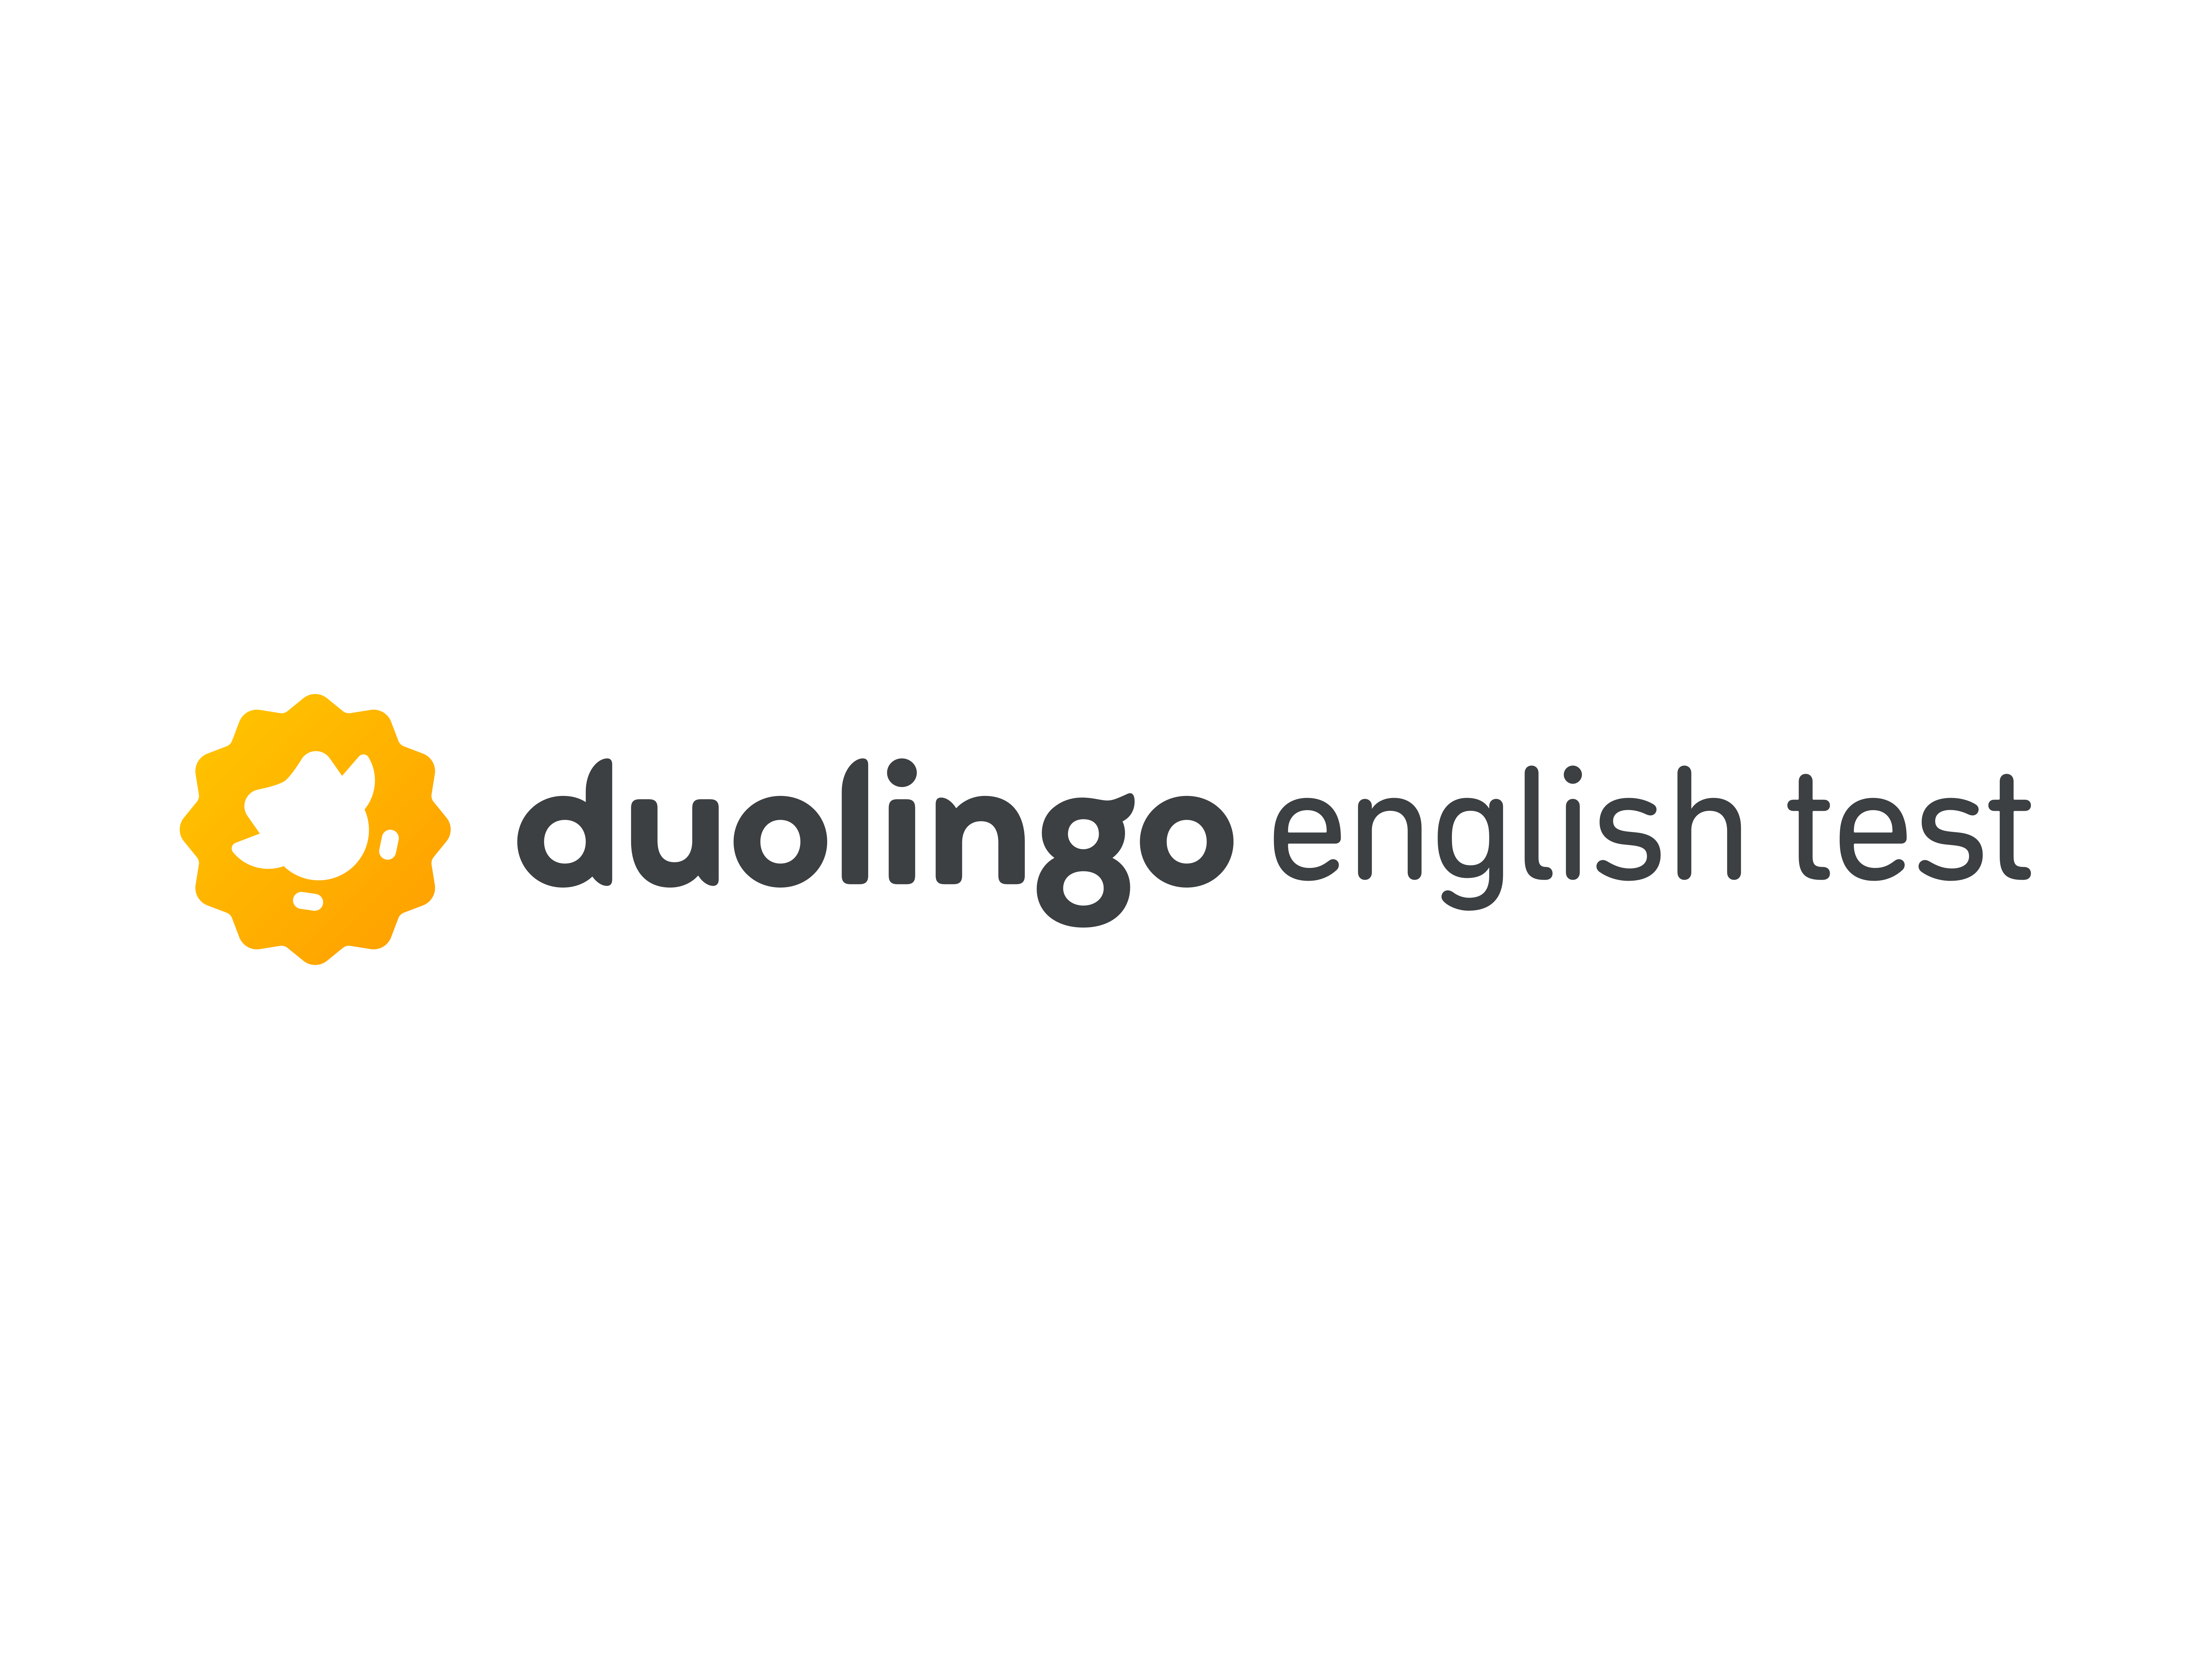 duolingo english test logo by jack morgan 2